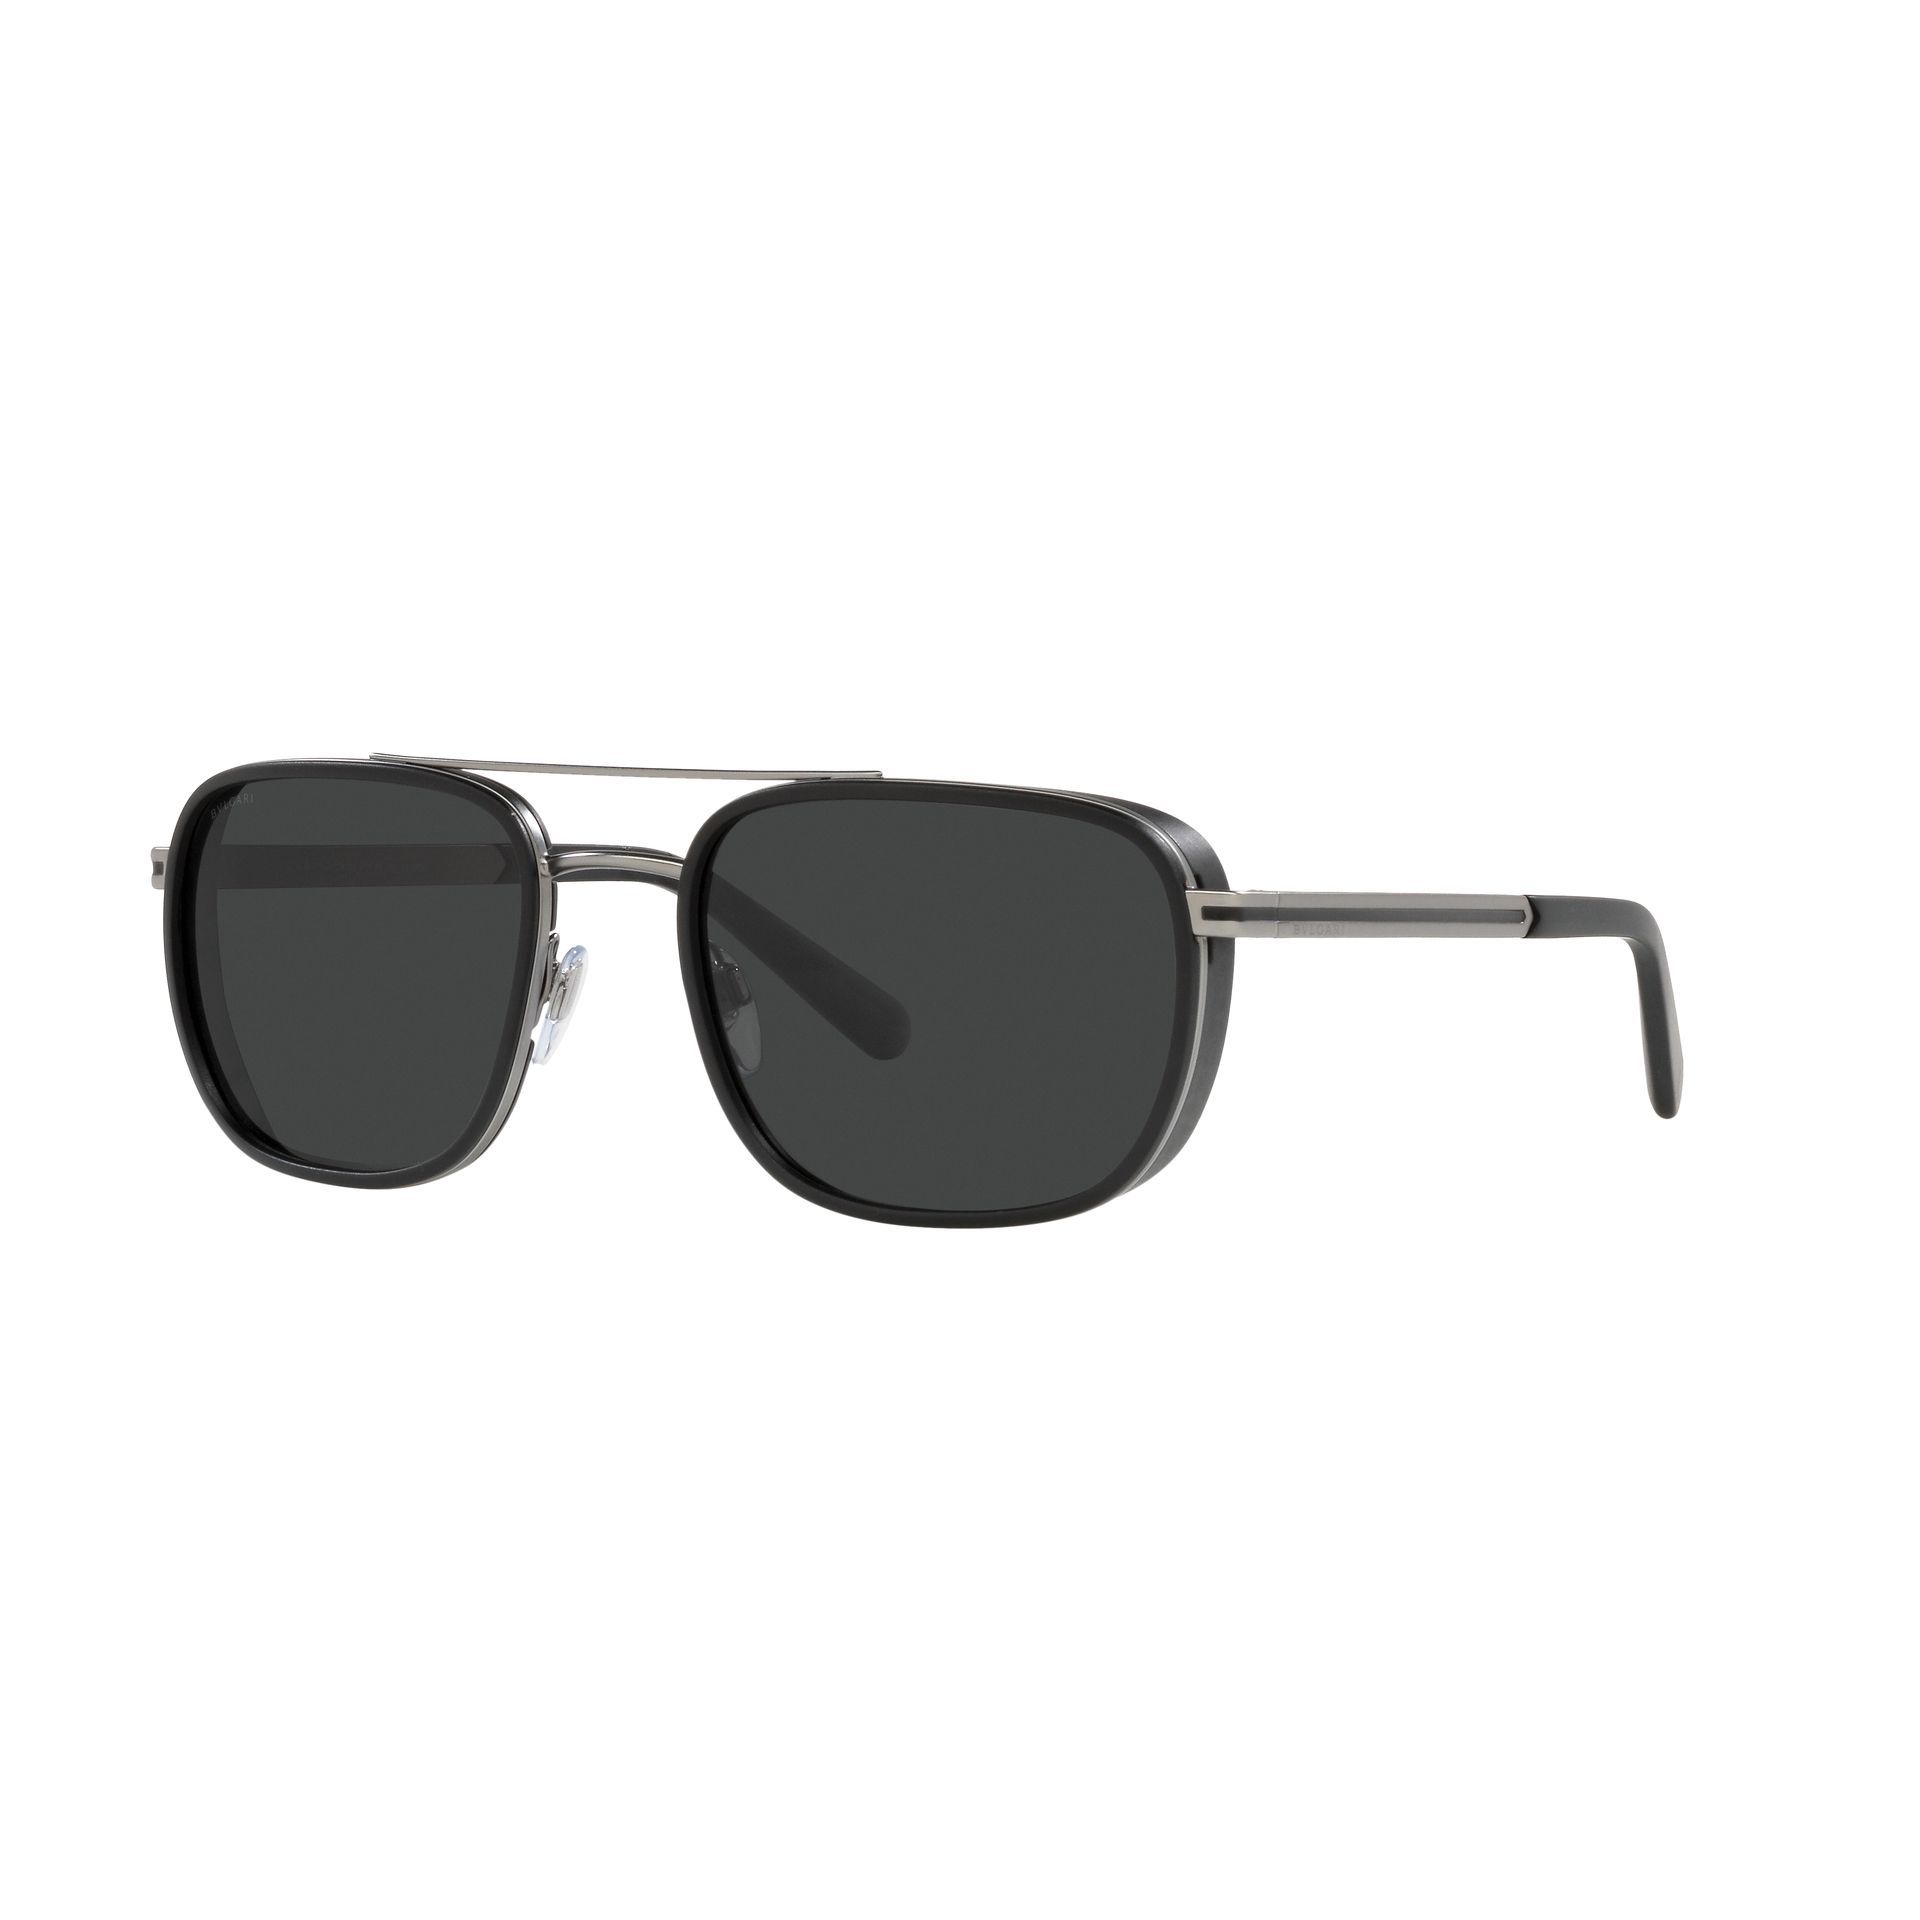 BV5053 Rectangle Sunglasses 195 48 - size 56